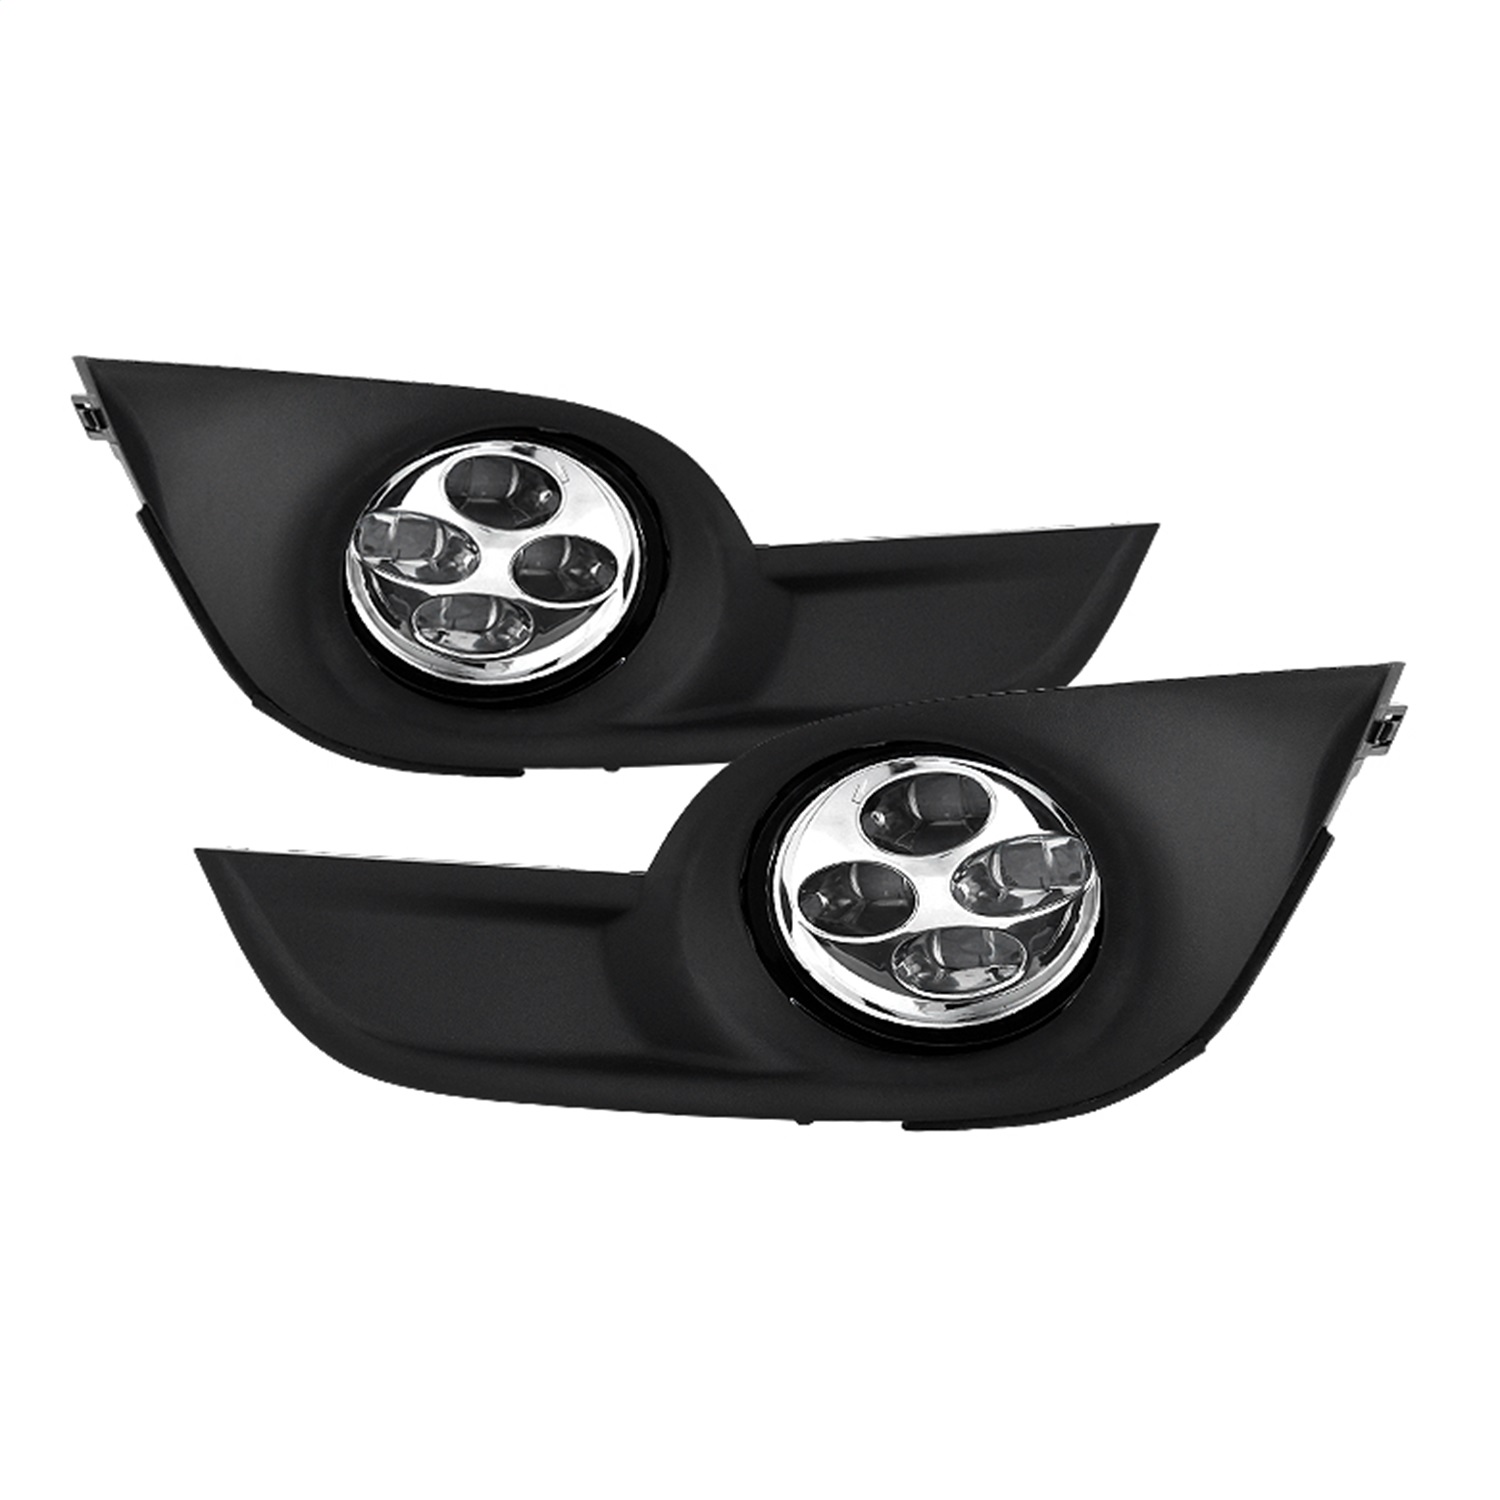 Spyder Auto 9031649 Daytime DRL LED Running Fog Lights Fits 13-15 Altima